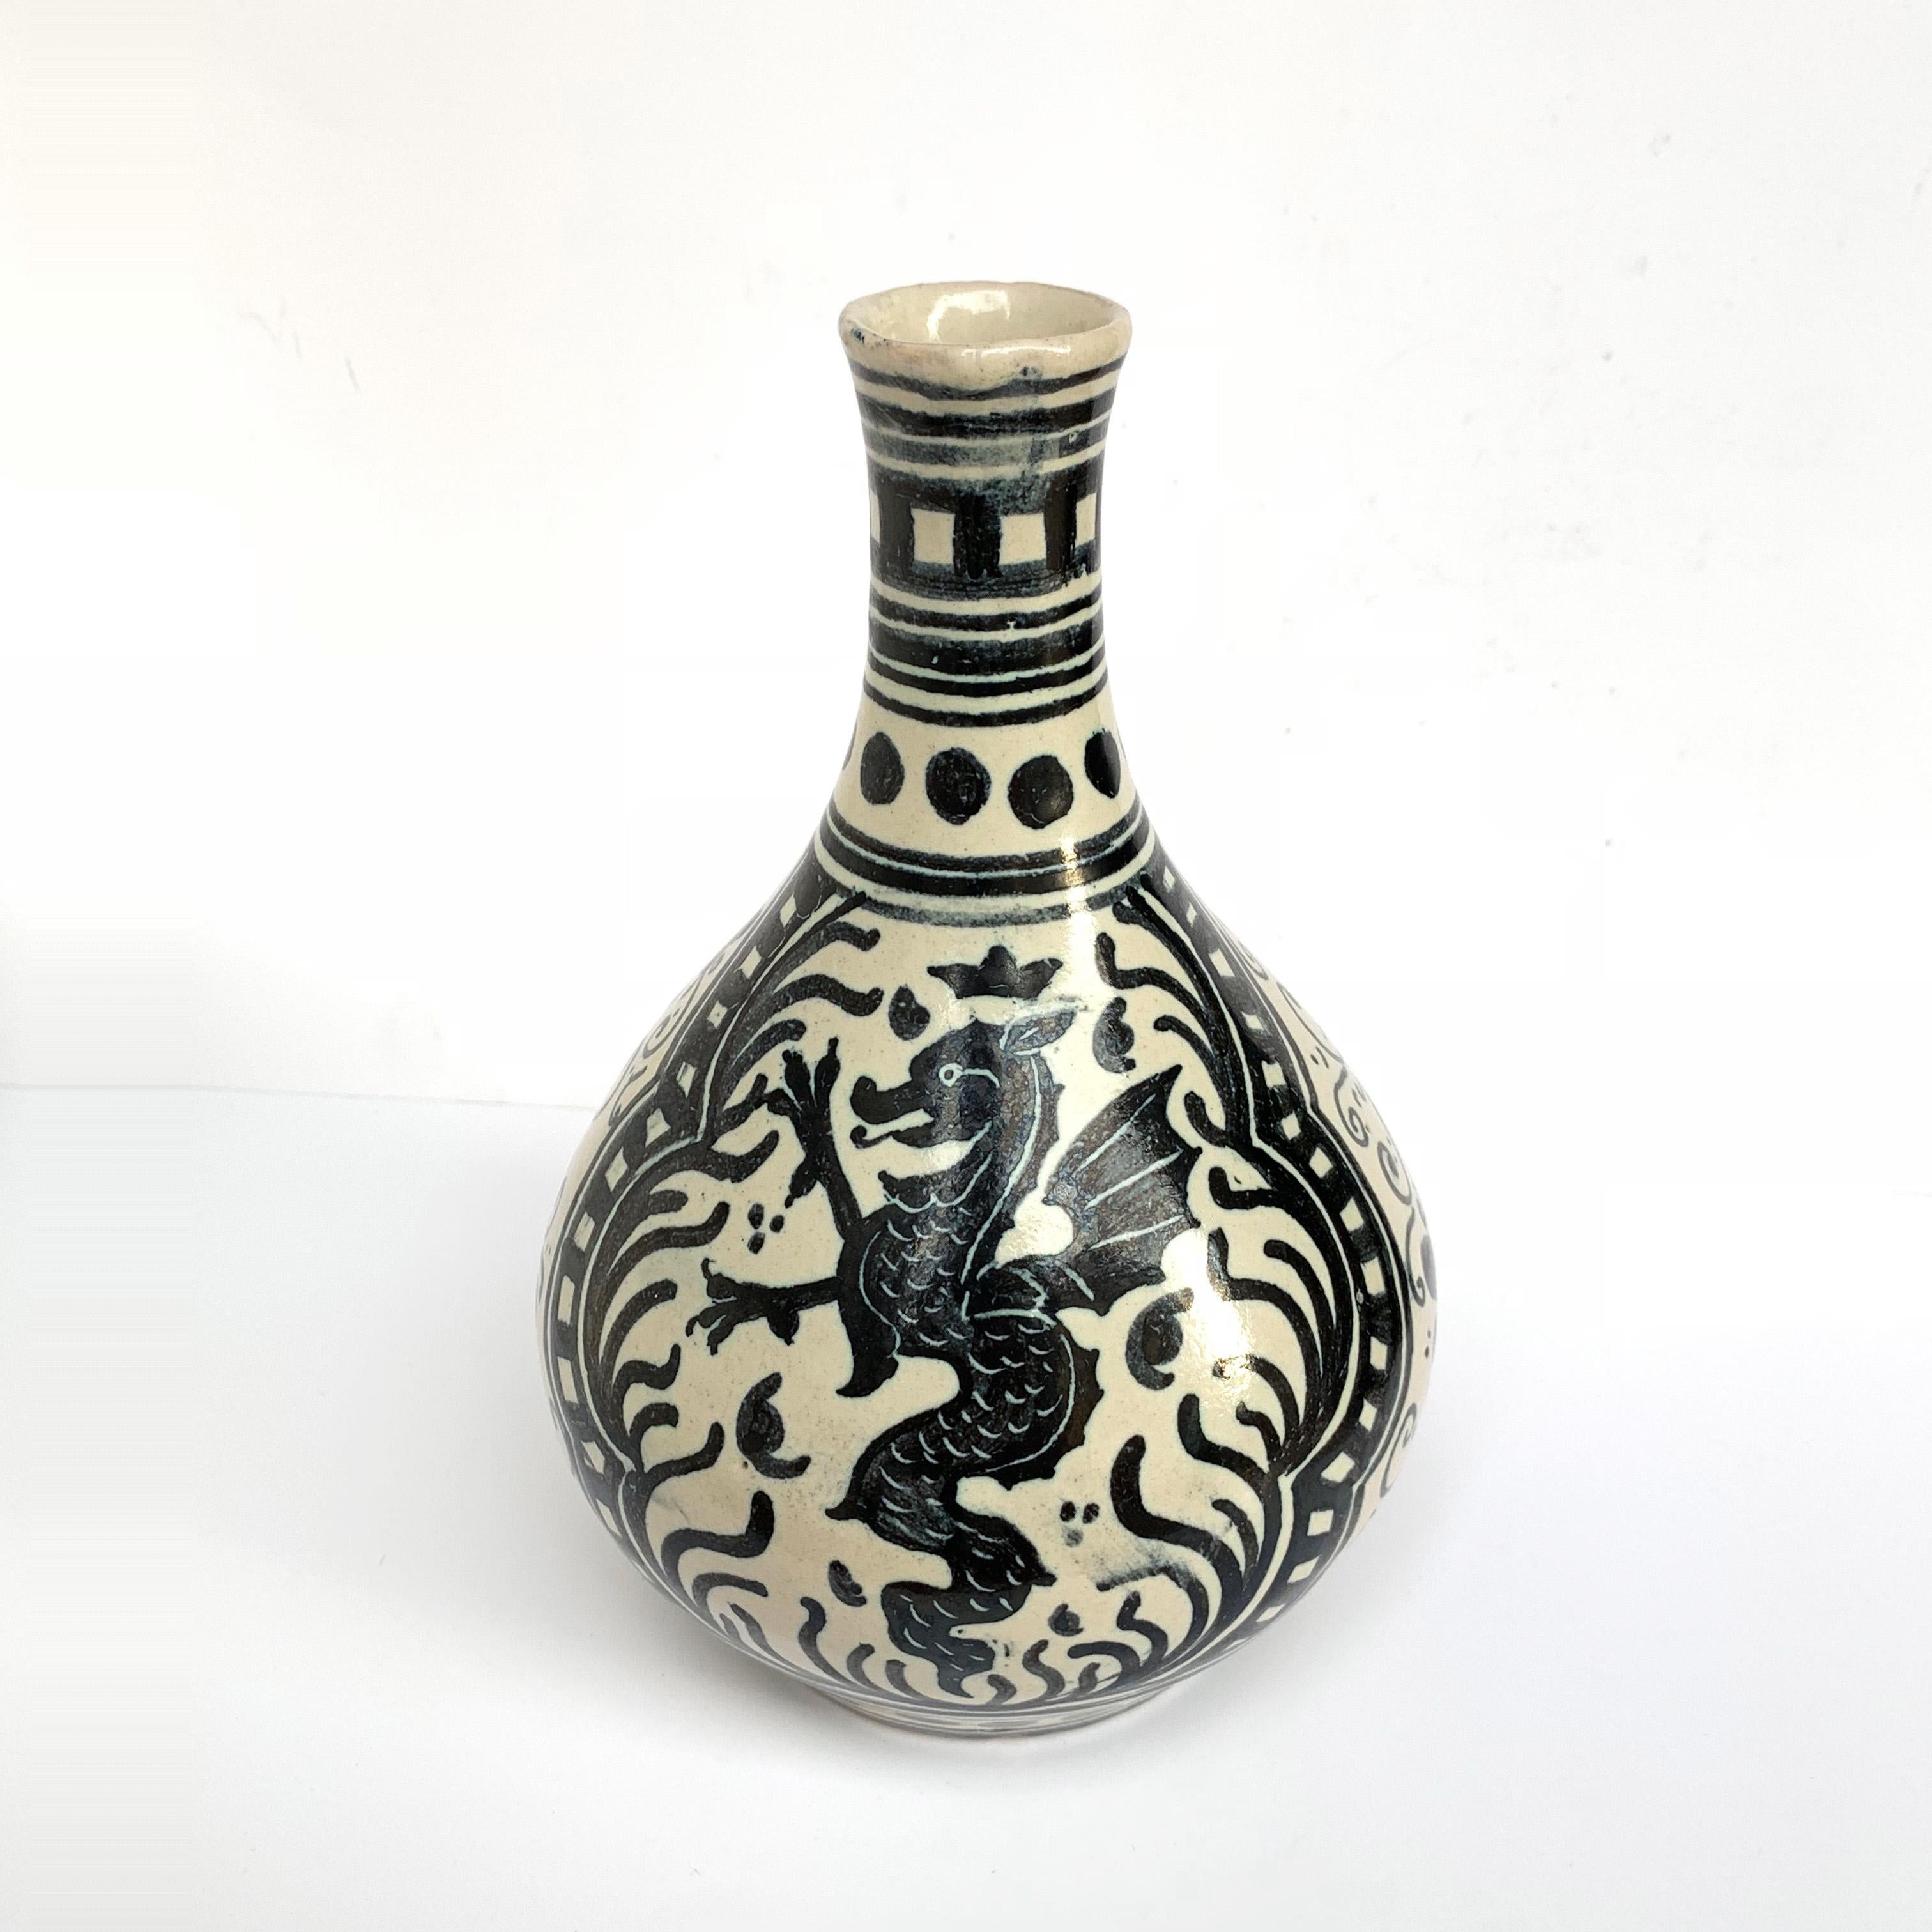 Bellissimo vaso in stile RAFFAELLO , raffigurante un Drago
Deruta, Italien, 1960er Jahre.